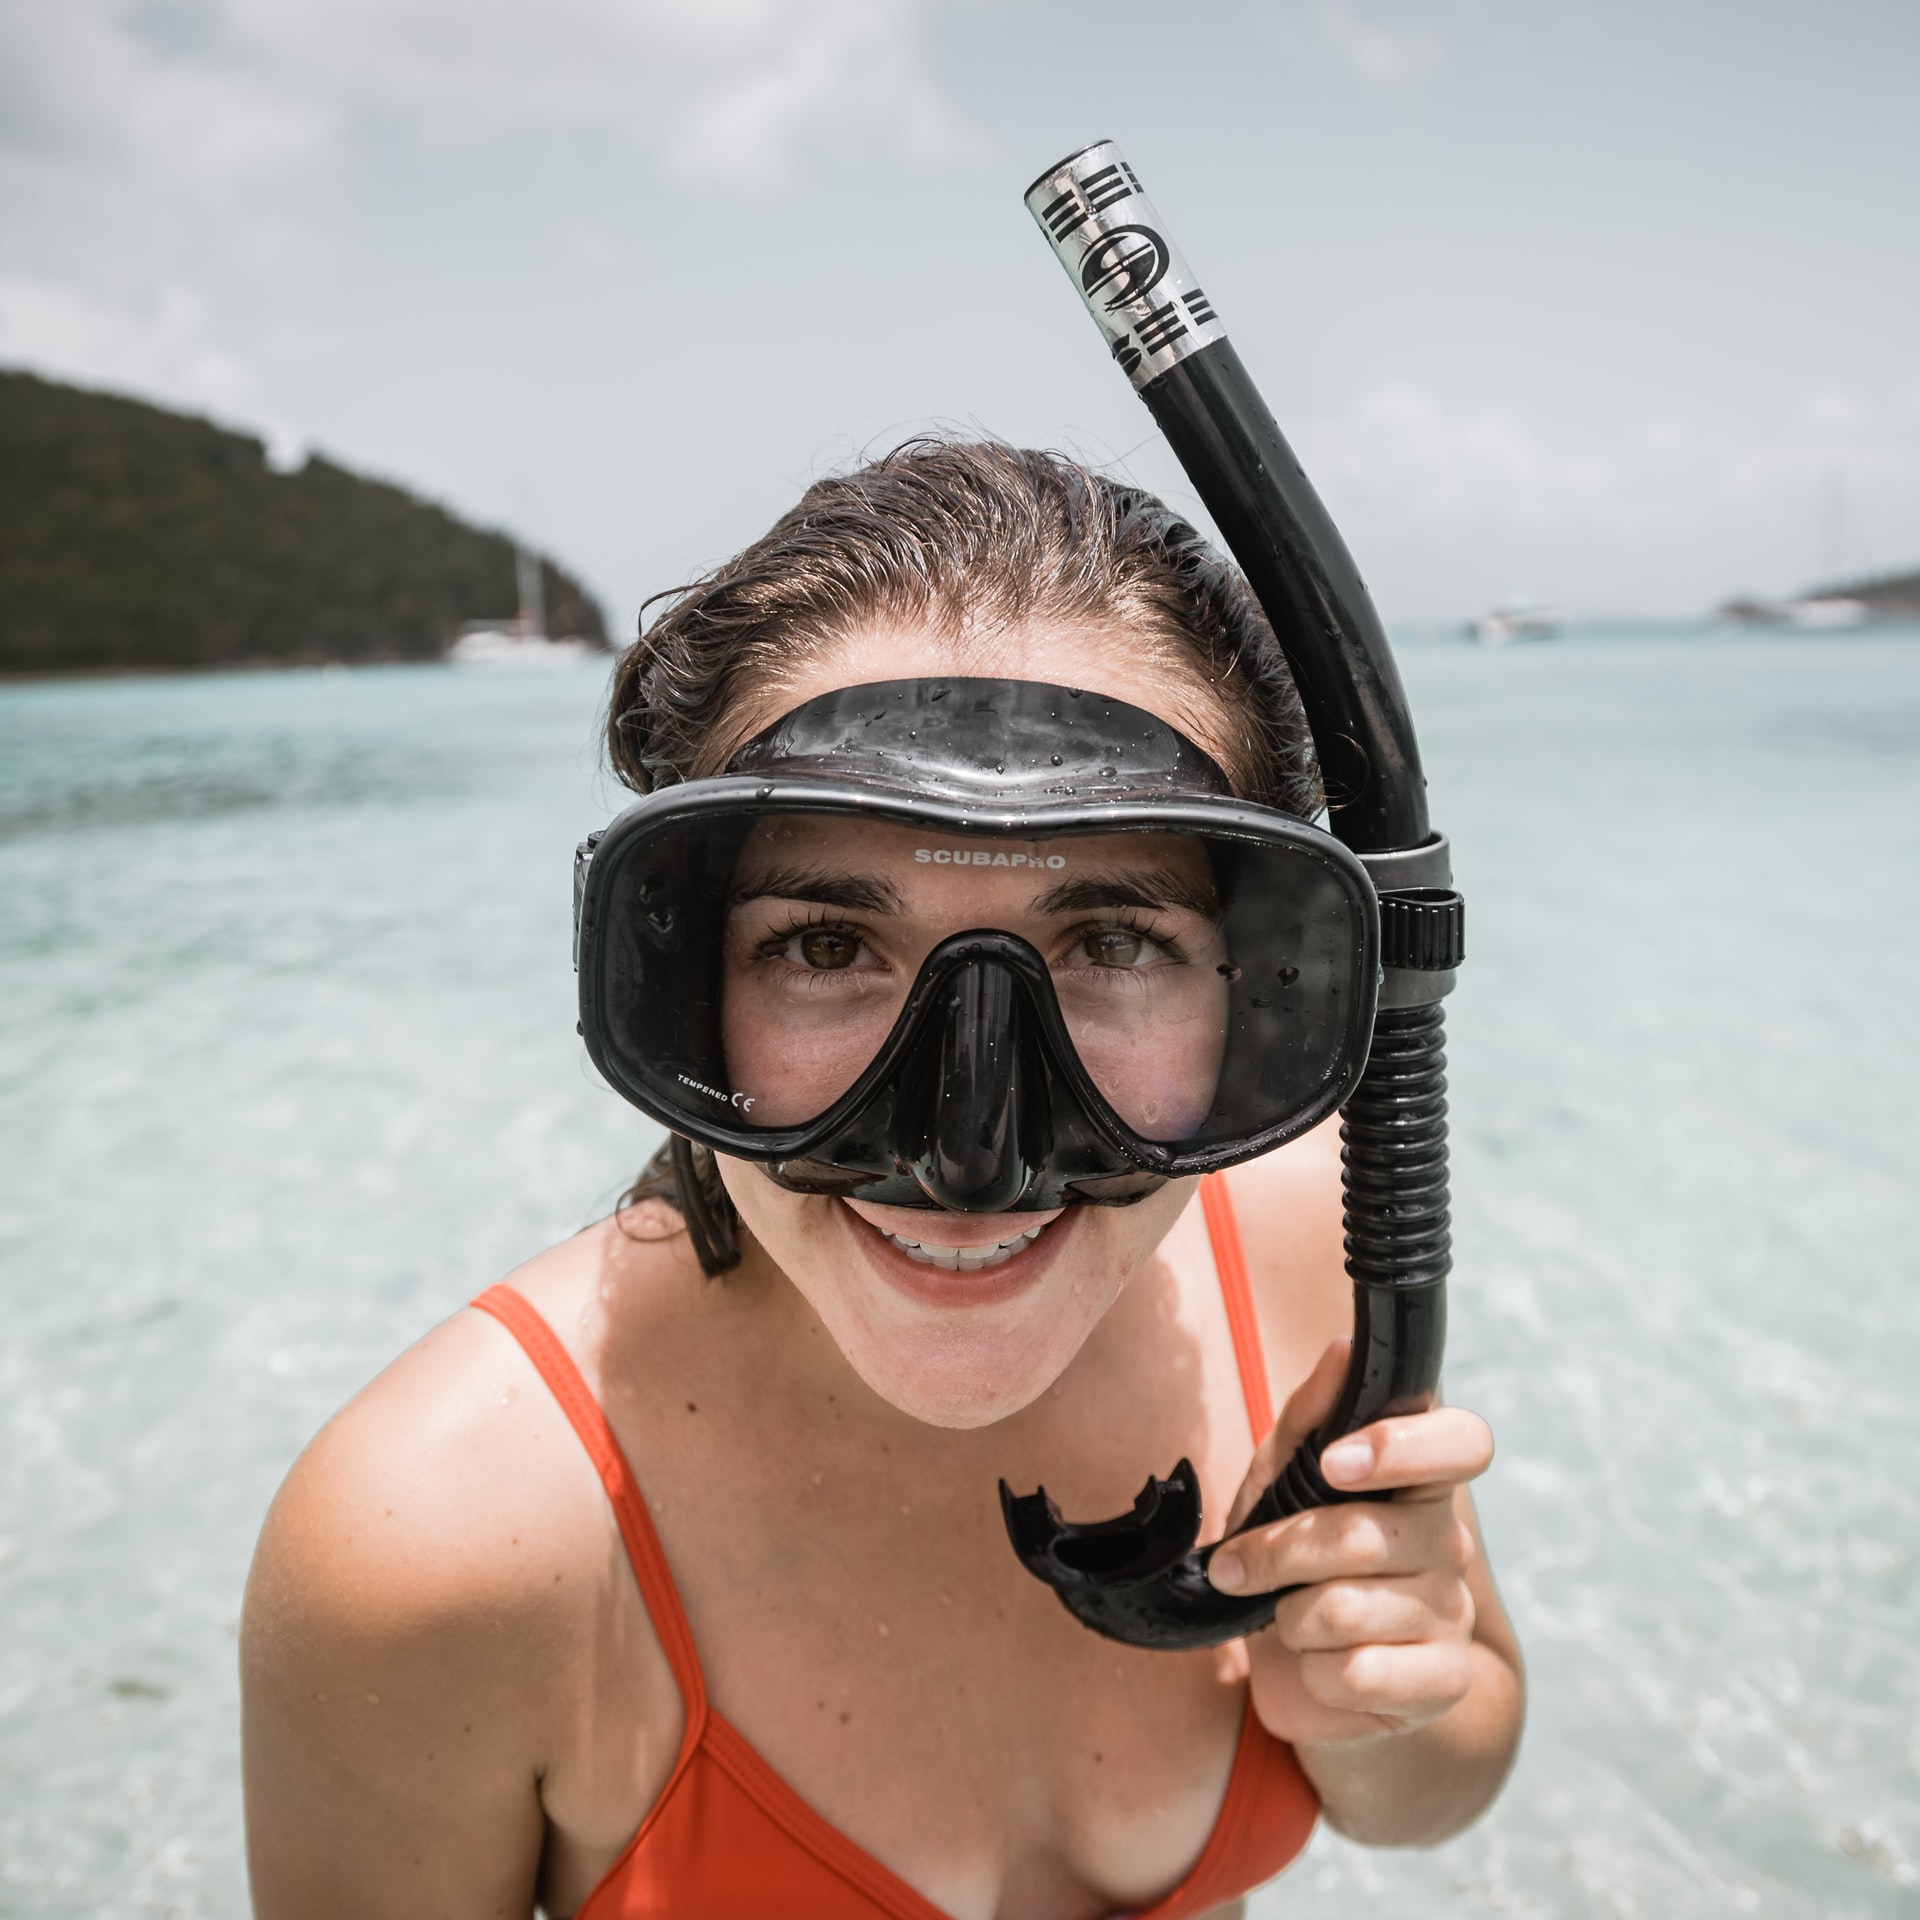 How Do Snorkel Masks Work